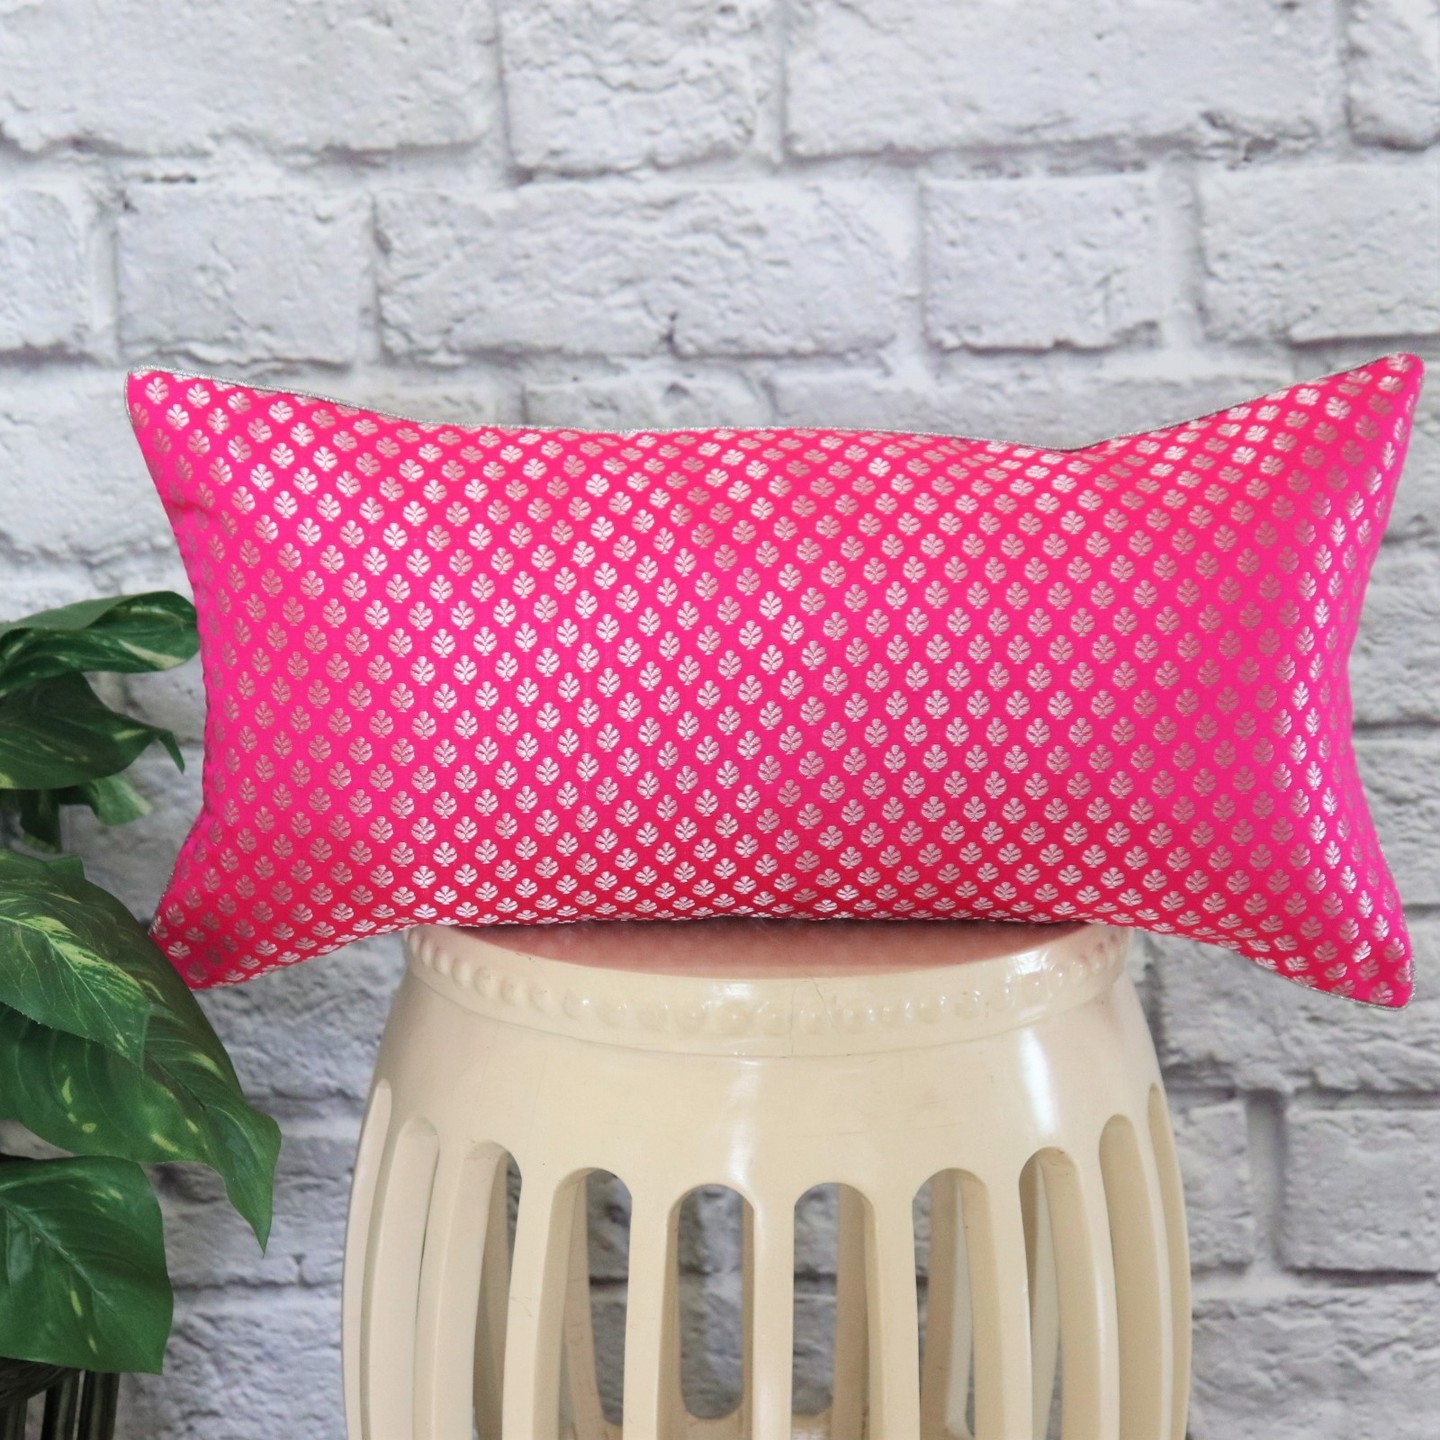 Hot Pink Brocade 30cmsx58cms Cushion Cover